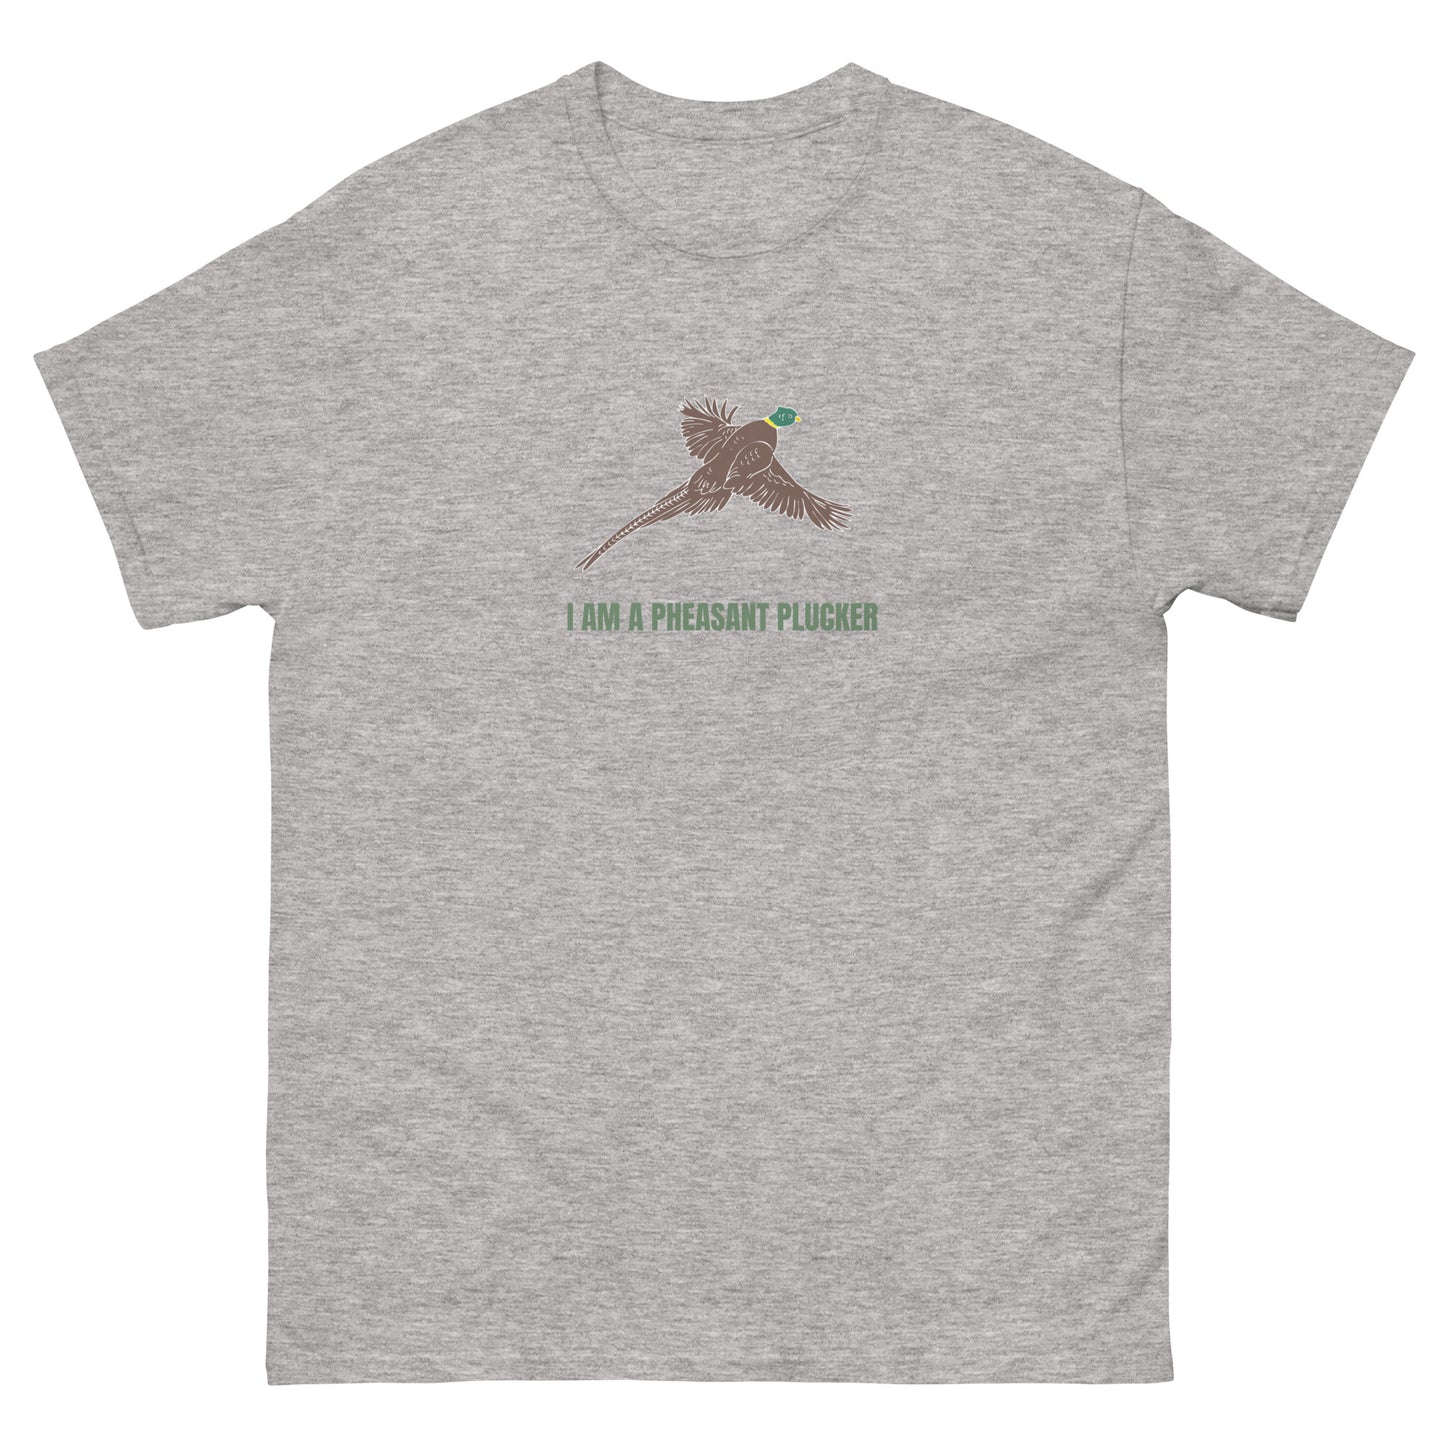 I am a pheasant plucker - Unisex T-Shirt